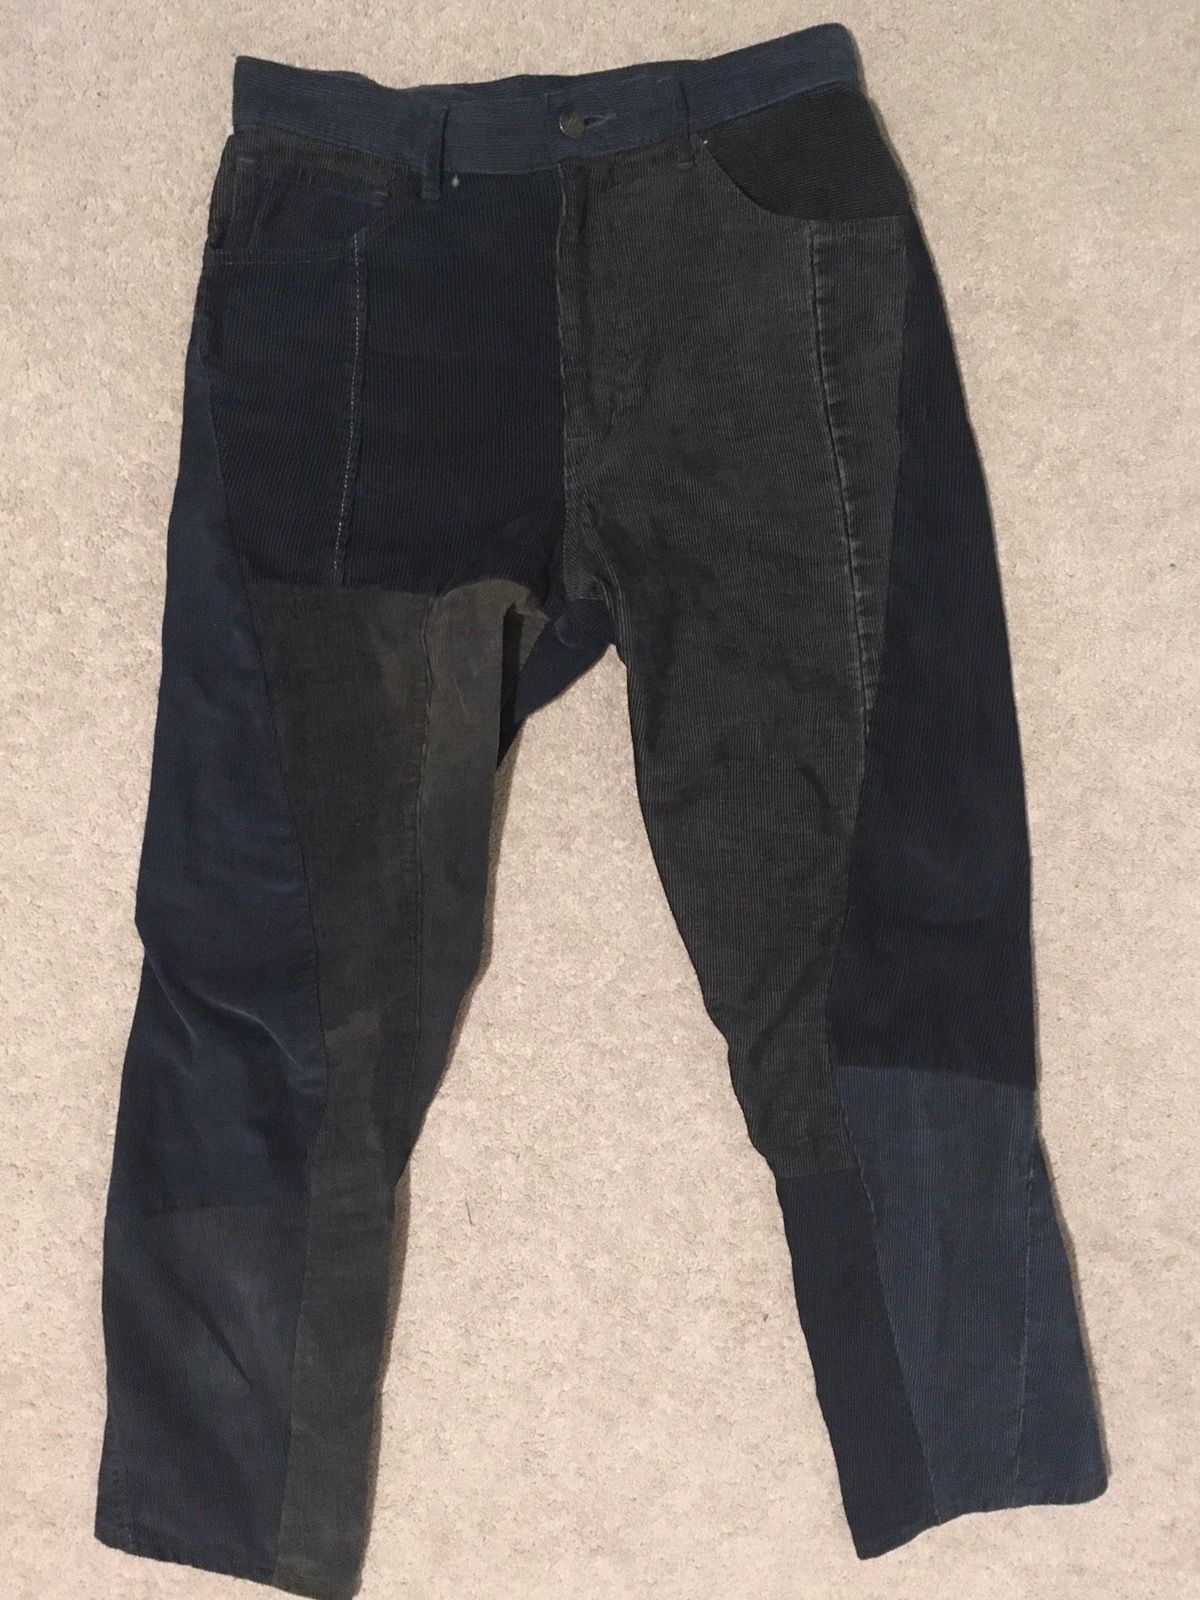 Needles Rebuild Patchwork Corduroy Trousers Size US 29 - 5 Thumbnail